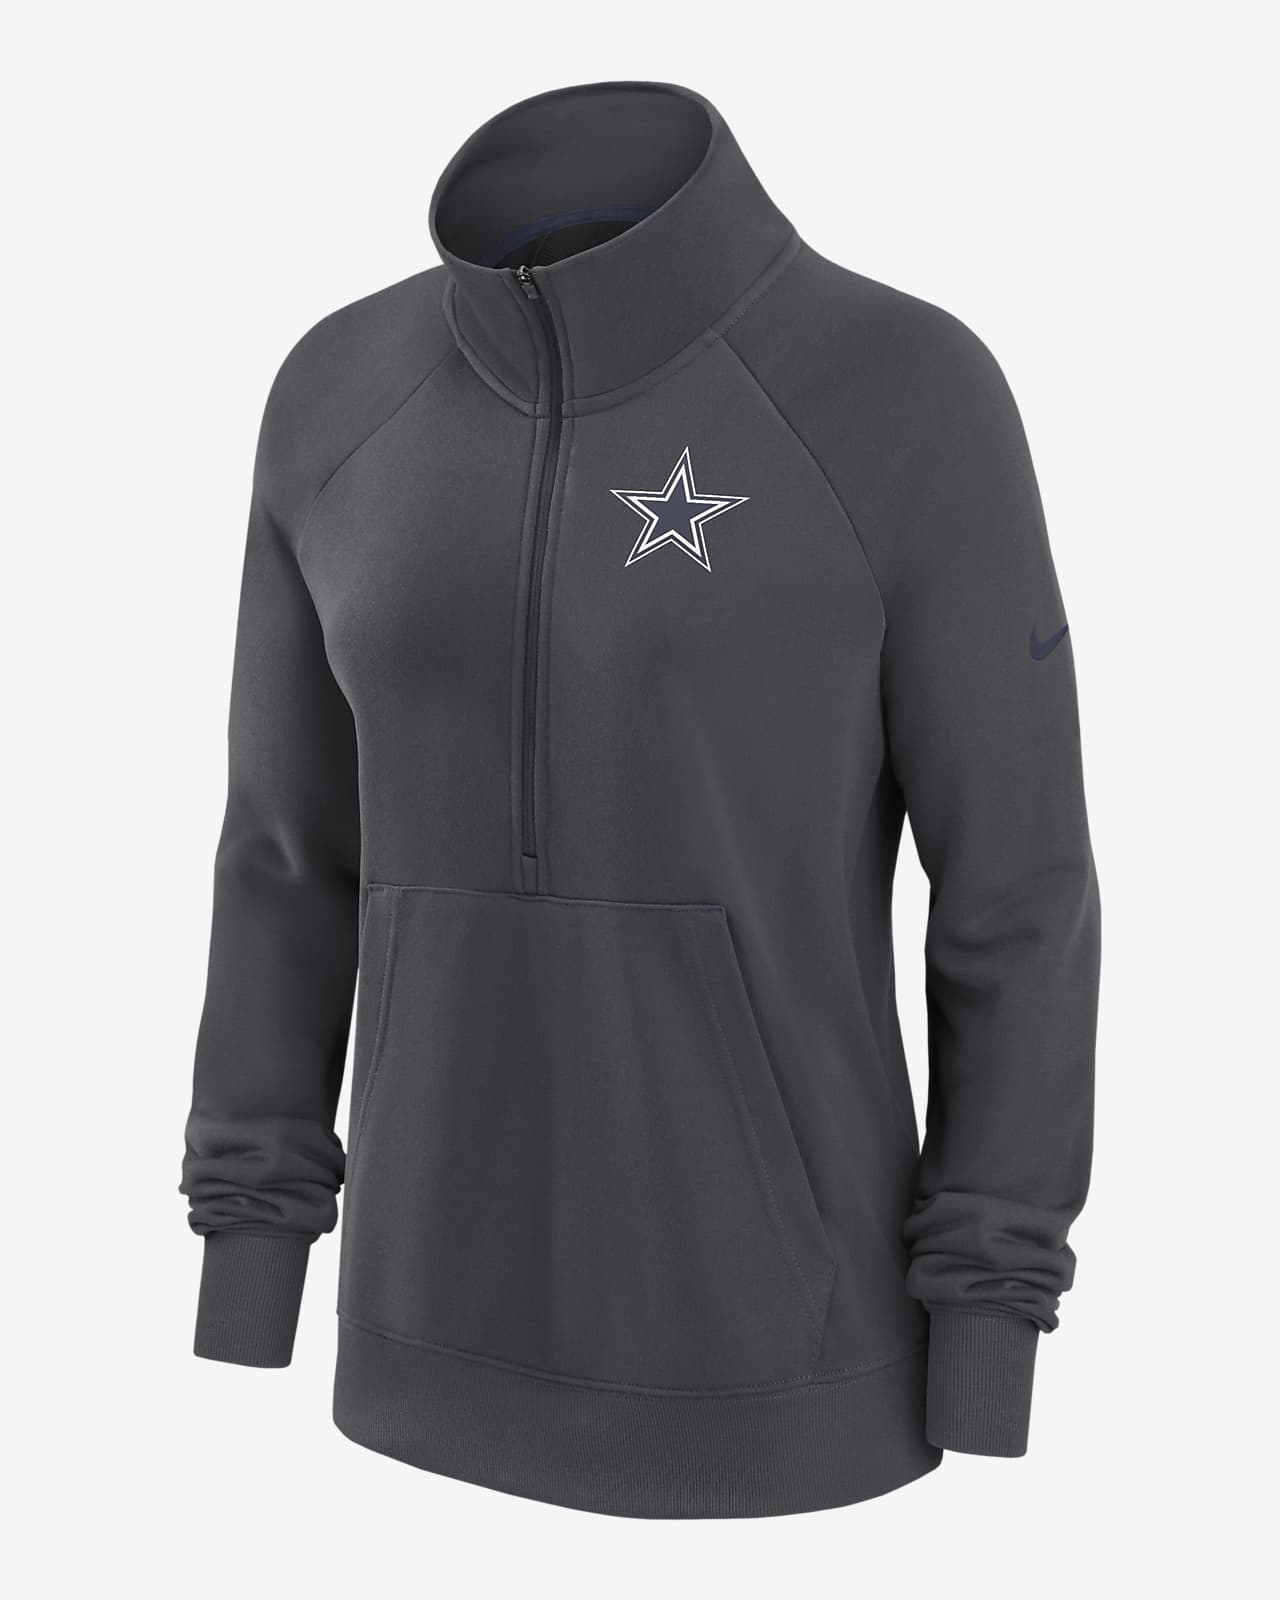 Nike Dri-FIT Premium (NFL Dallas Cowboys) Women's 1/2-Zip Pullover.